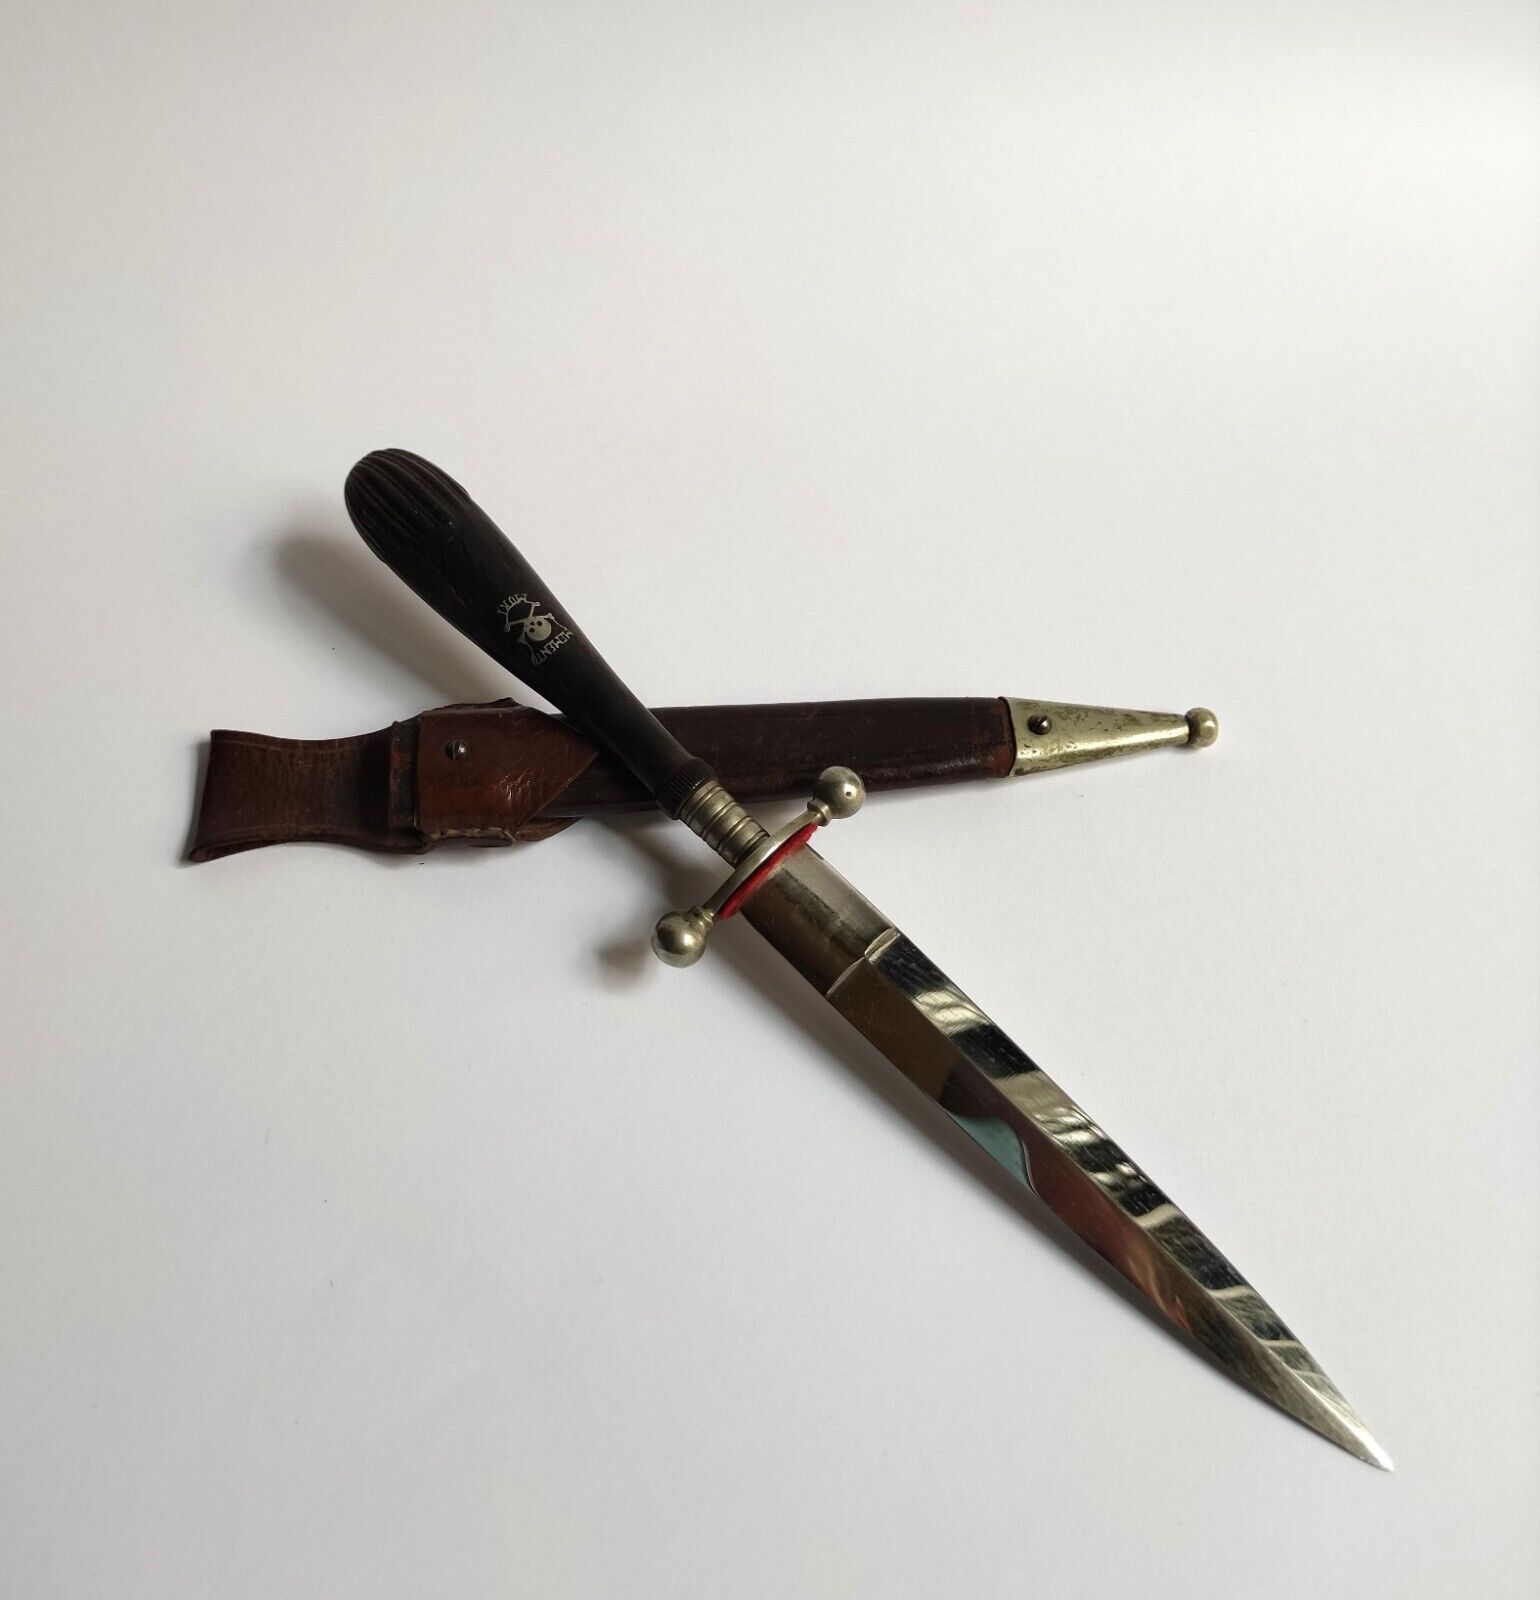 ONE OF A KIND ANTIQUE VICTORIAN MEMENTO MORI MASONIC OCCULT RITUAL KNIFE DAGGER